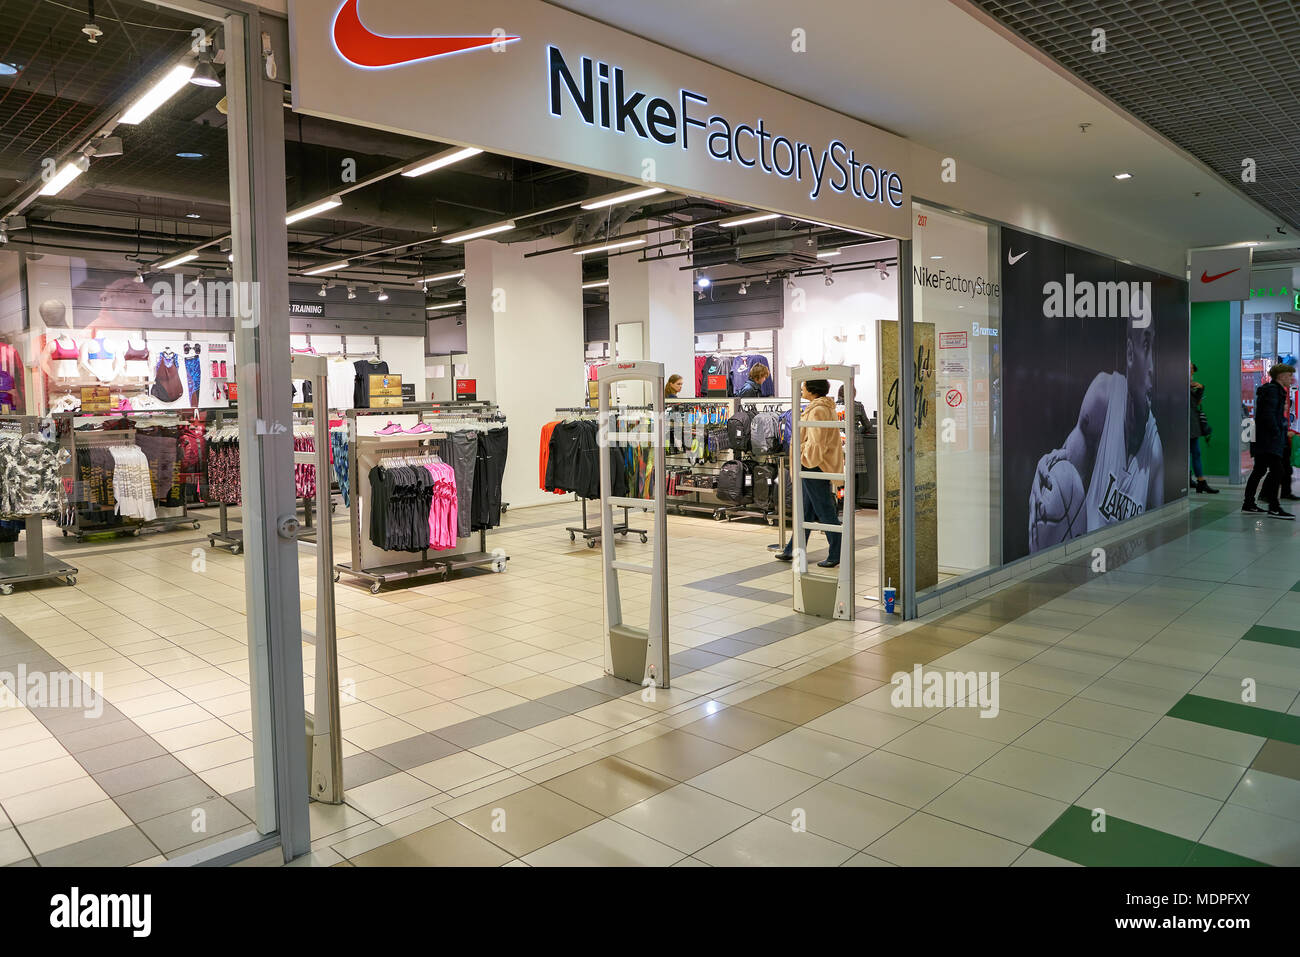 Nike Factory Store Immagini e Fotos 